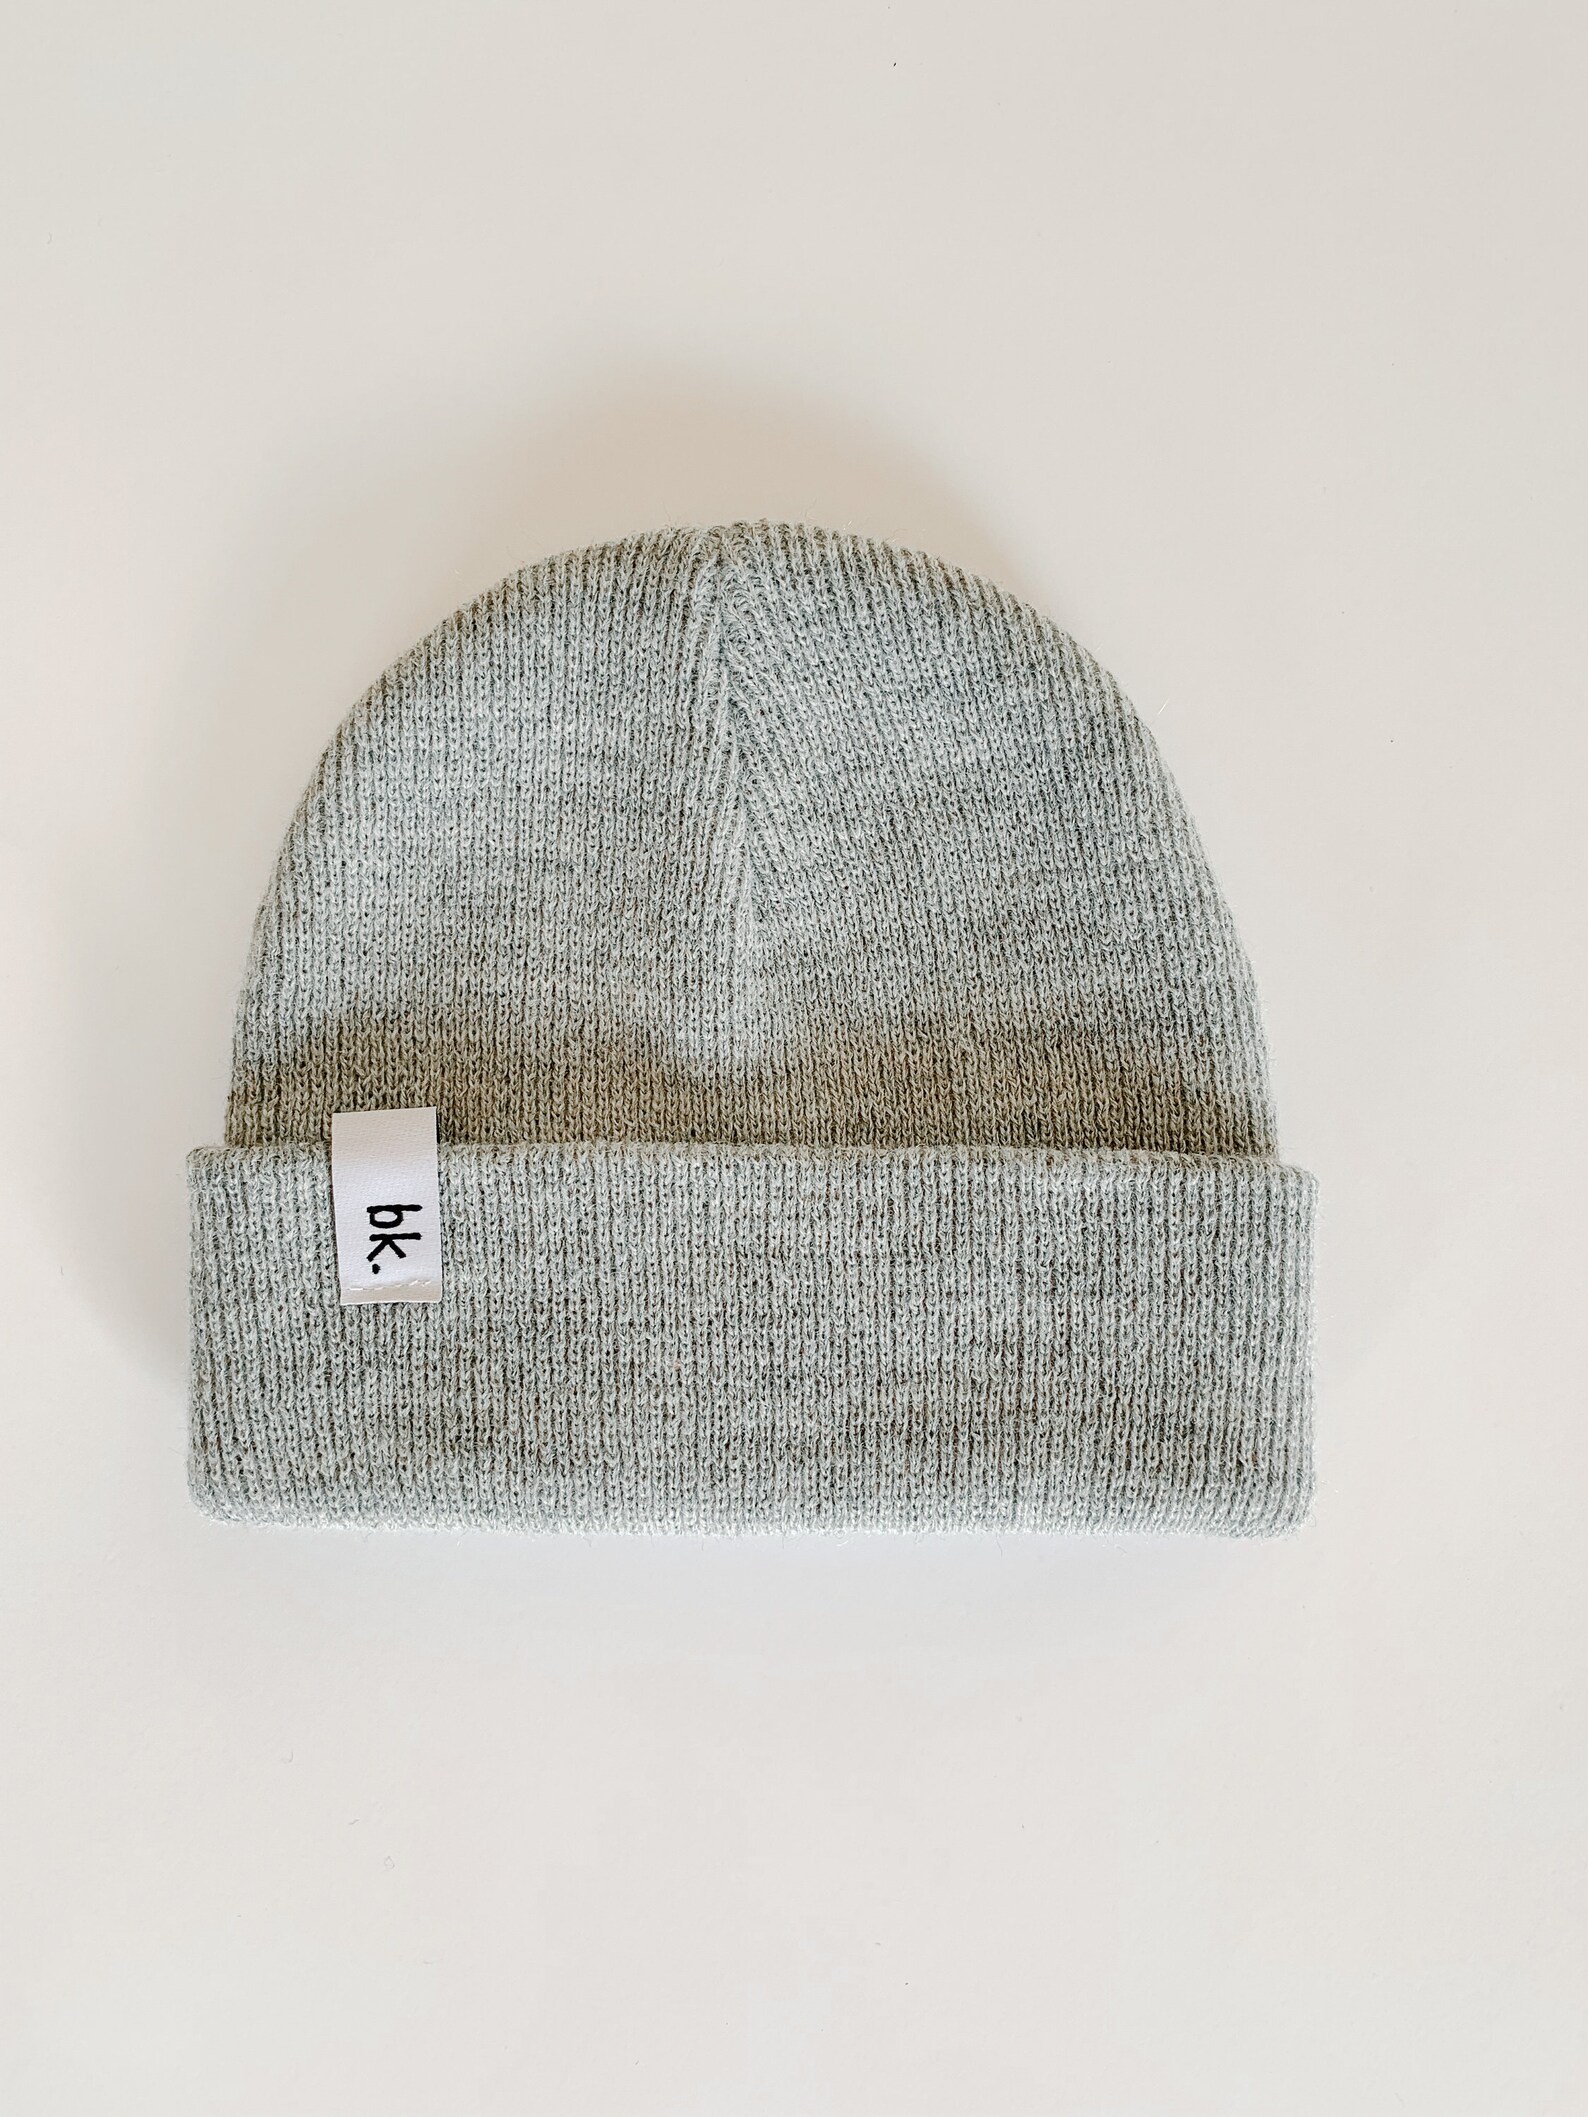 Grey Baby Beanie Rib-knit Winter Hat Baby Toque Newborn - Etsy